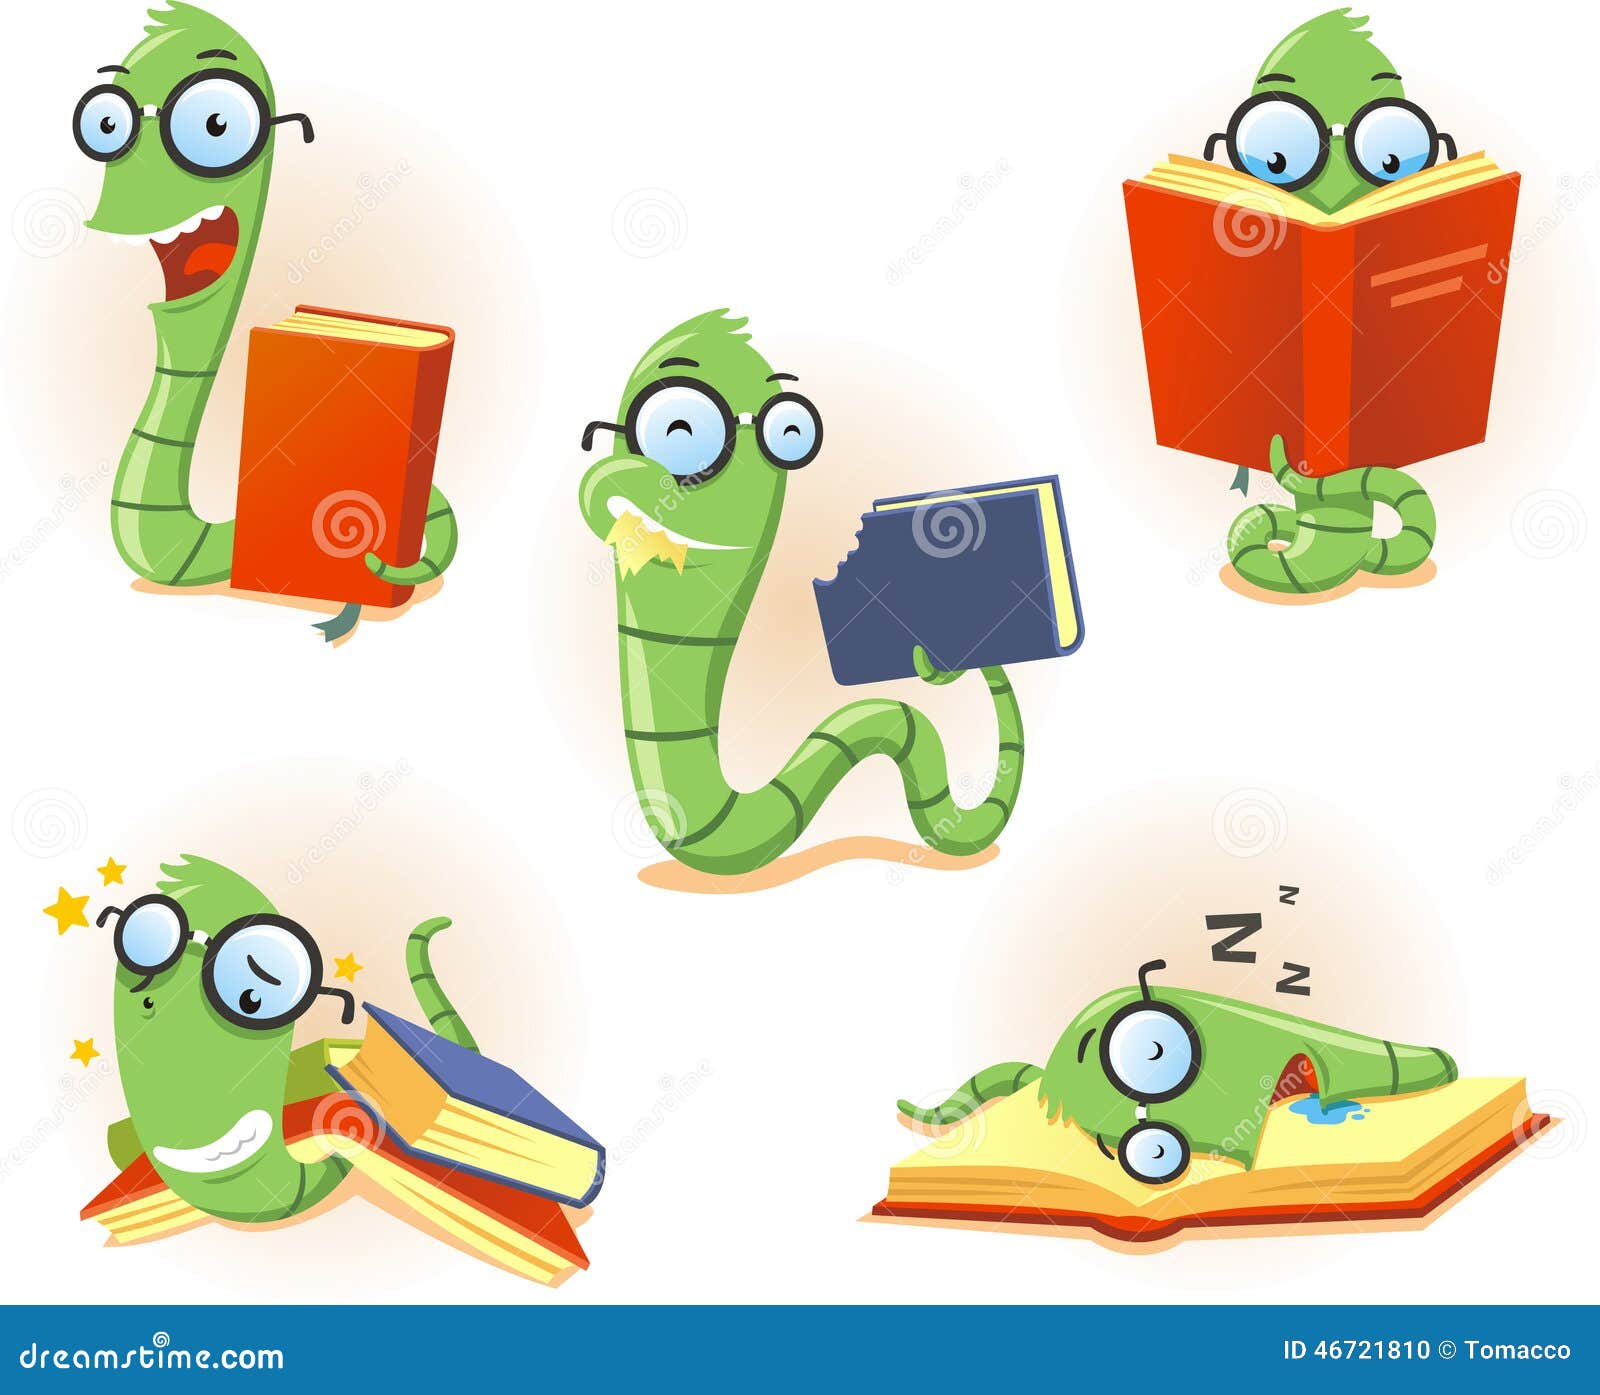 Set cartoon bookworm stock illustration. Illustration of sleeping - 46721810